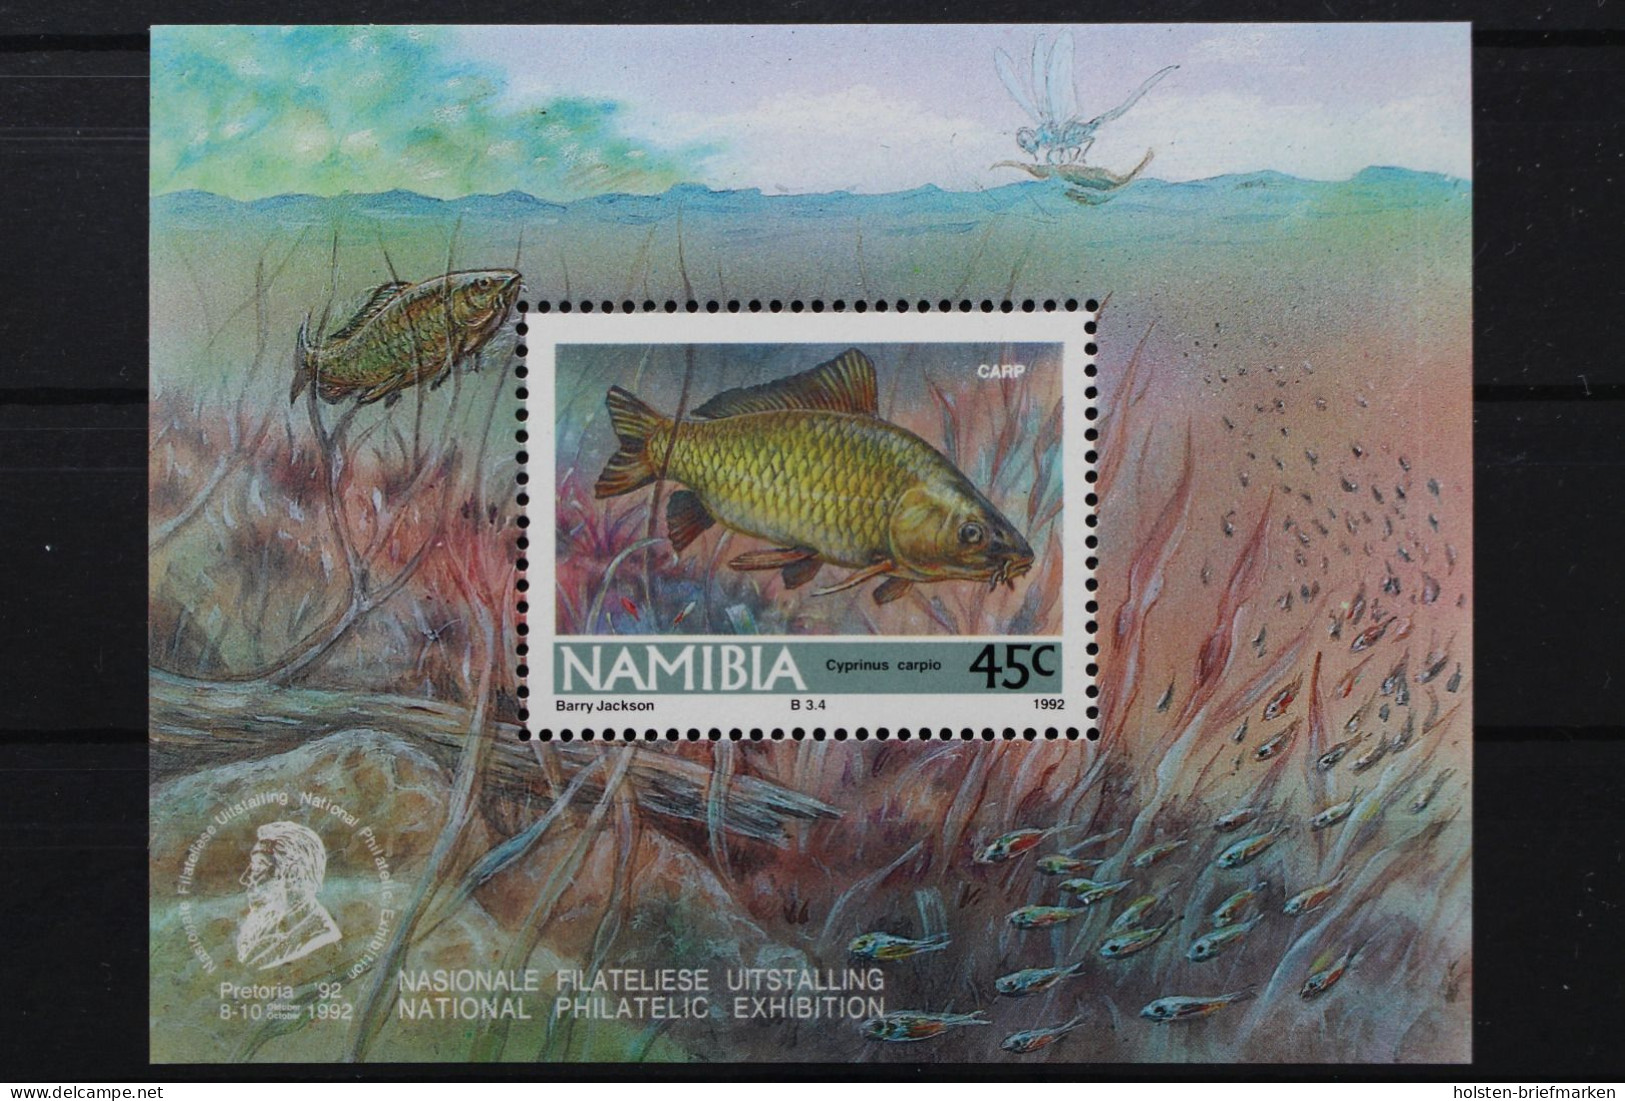 Namibia, MiNr. Block 14, Postfrisch - Namibie (1990- ...)